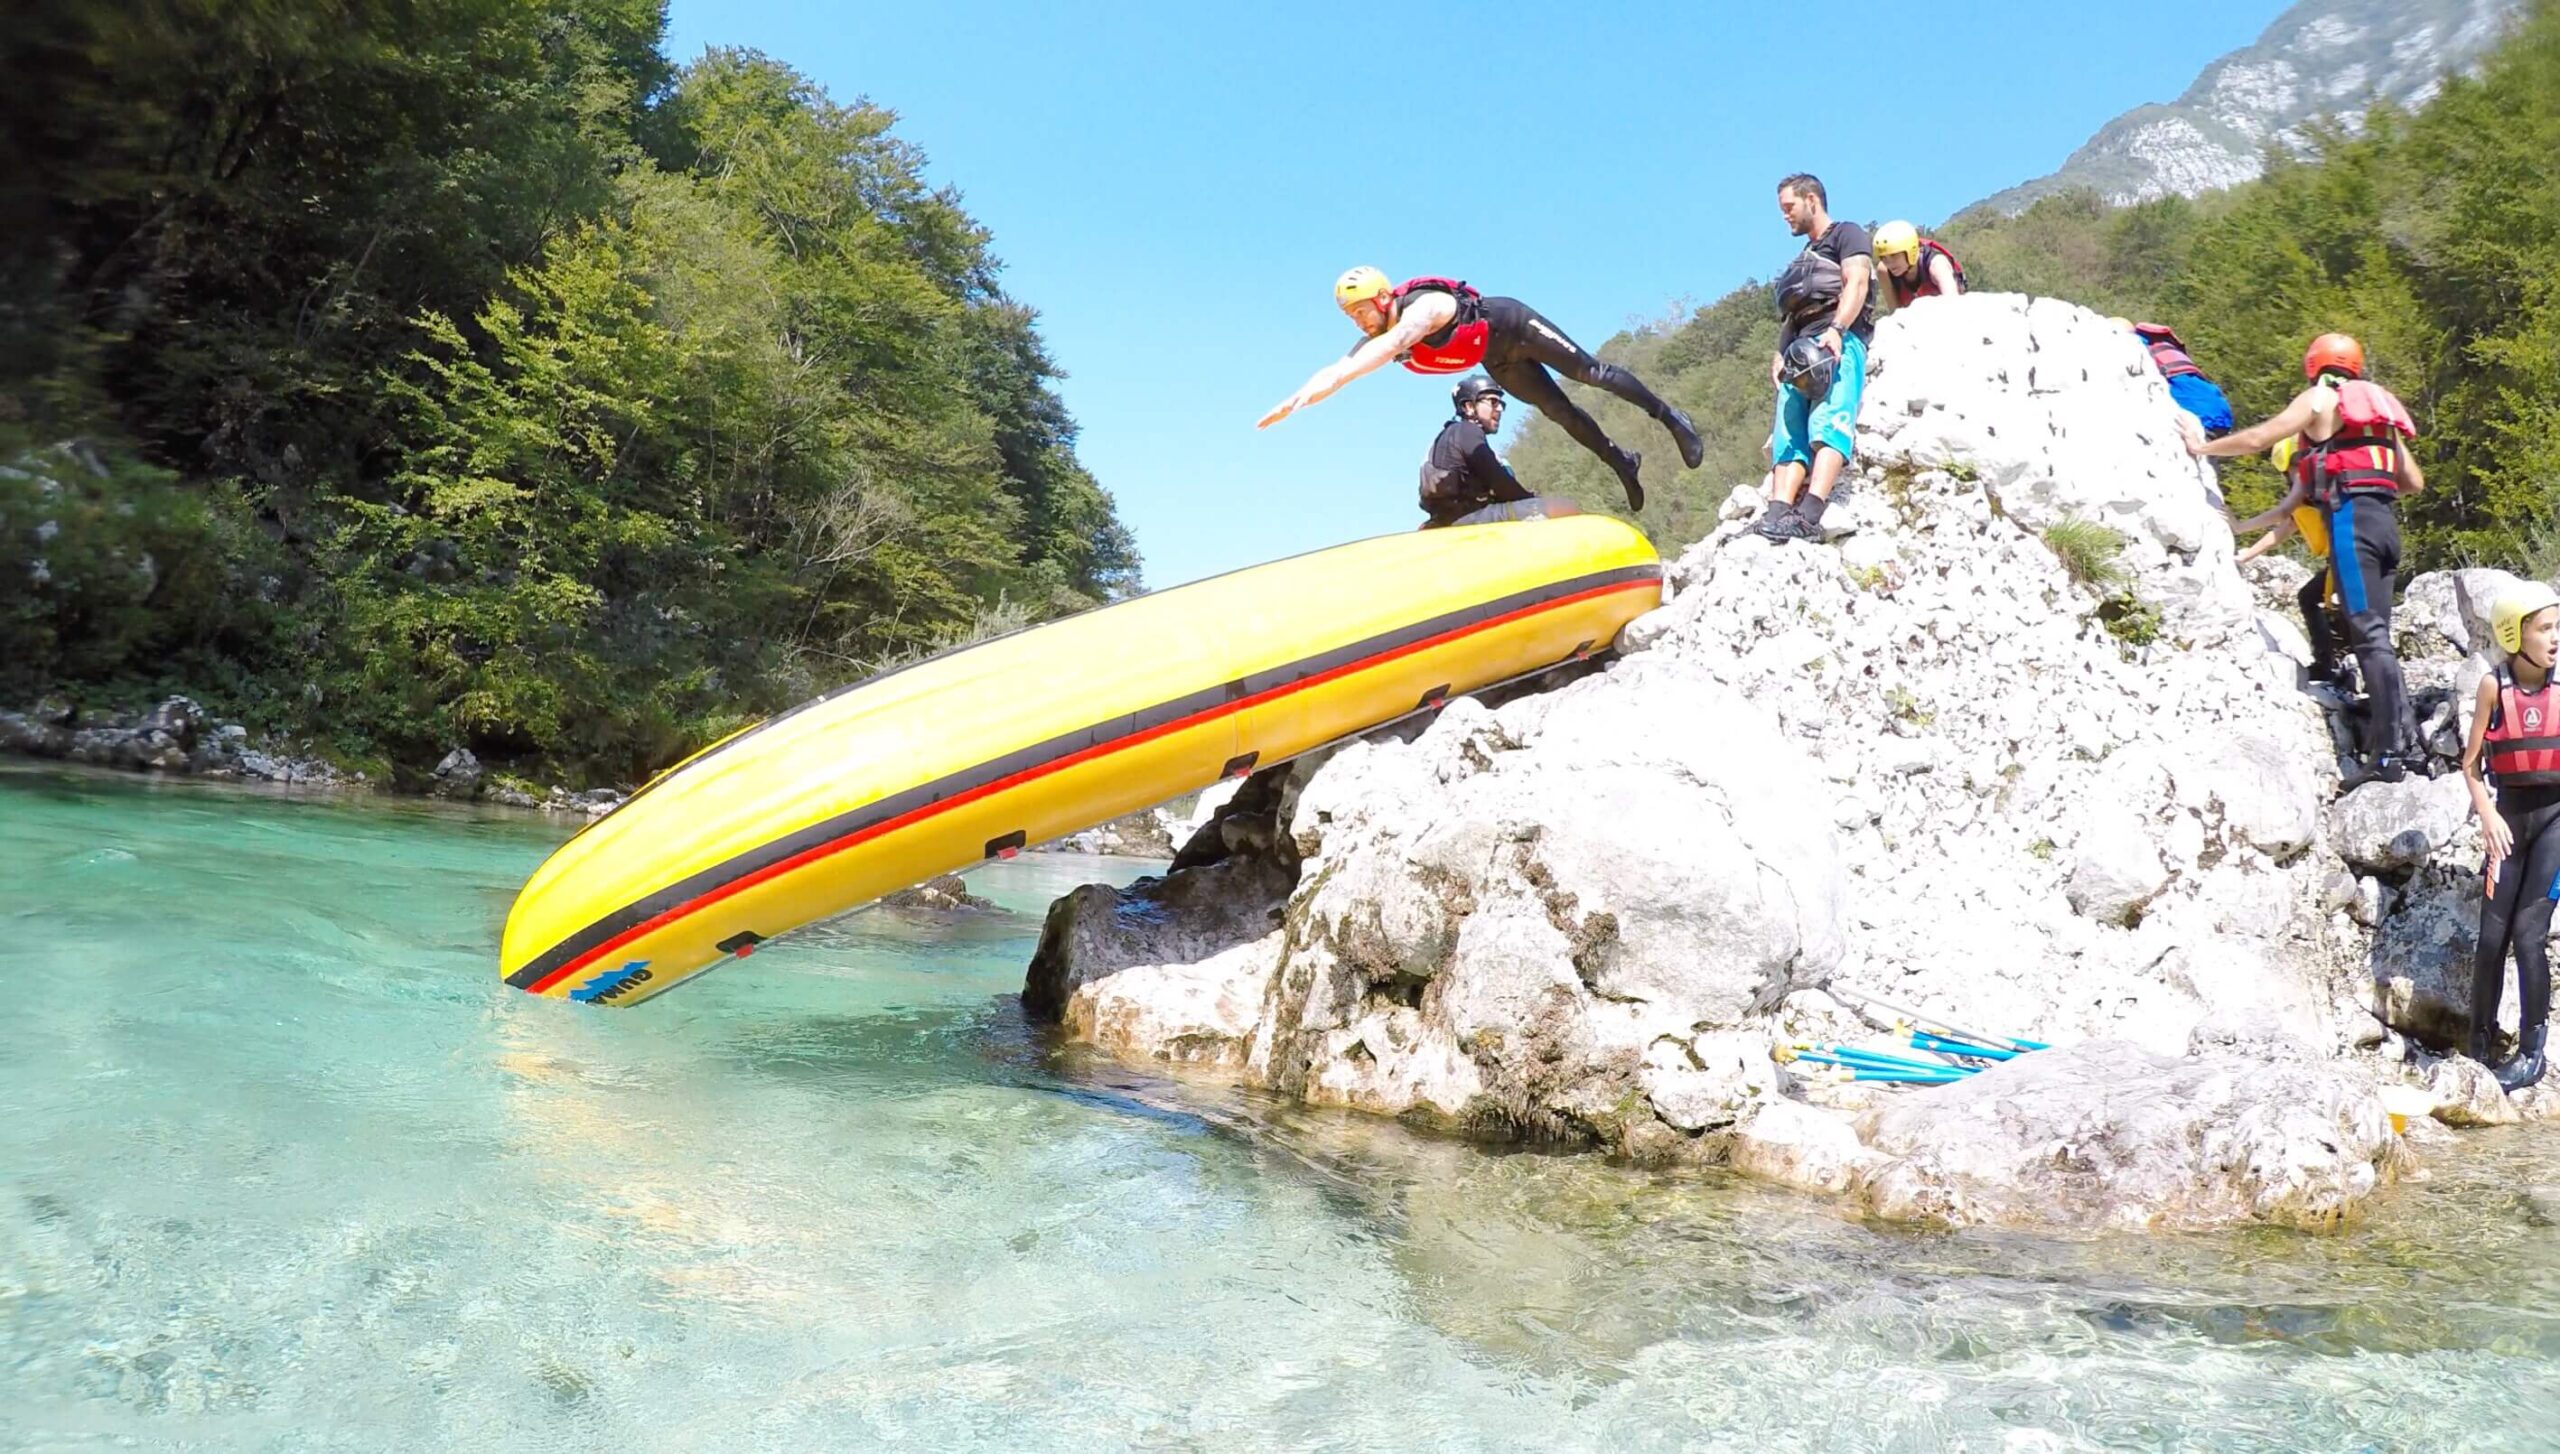 Alex jumping down upturned raft used as a slide, Soca River, Slovenia